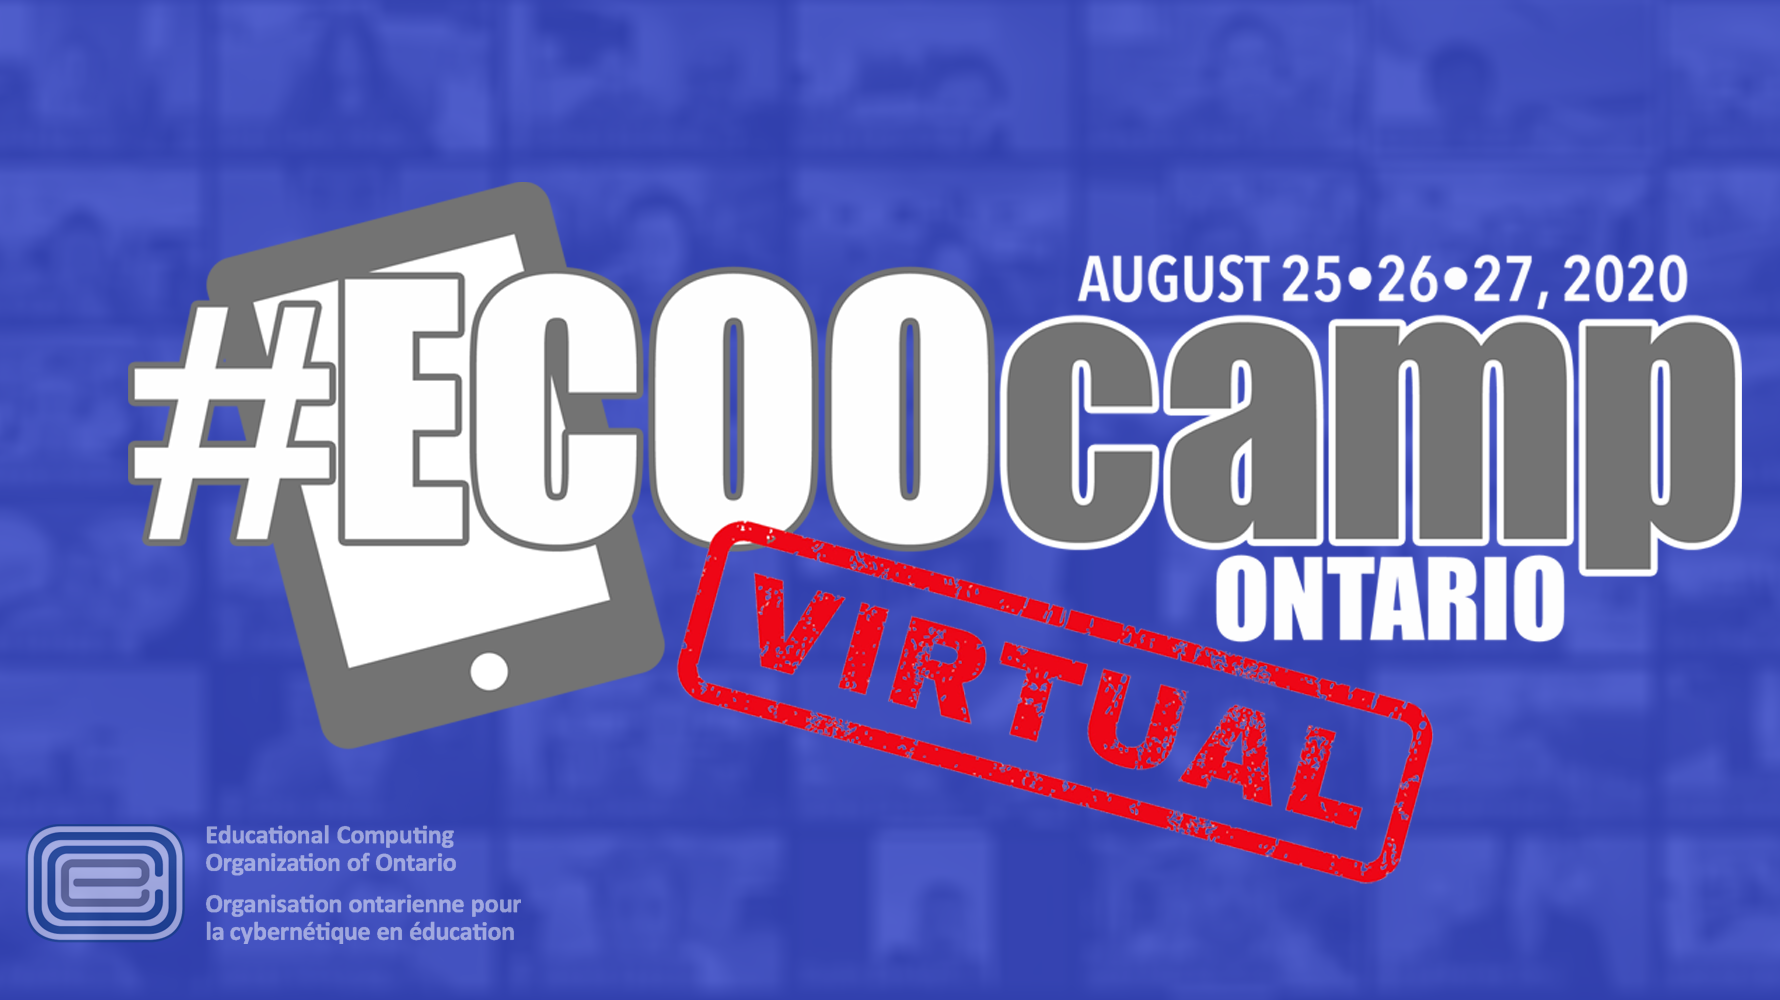 Session Slide Decks & Recordings from ECOOcamp Ontario 2020